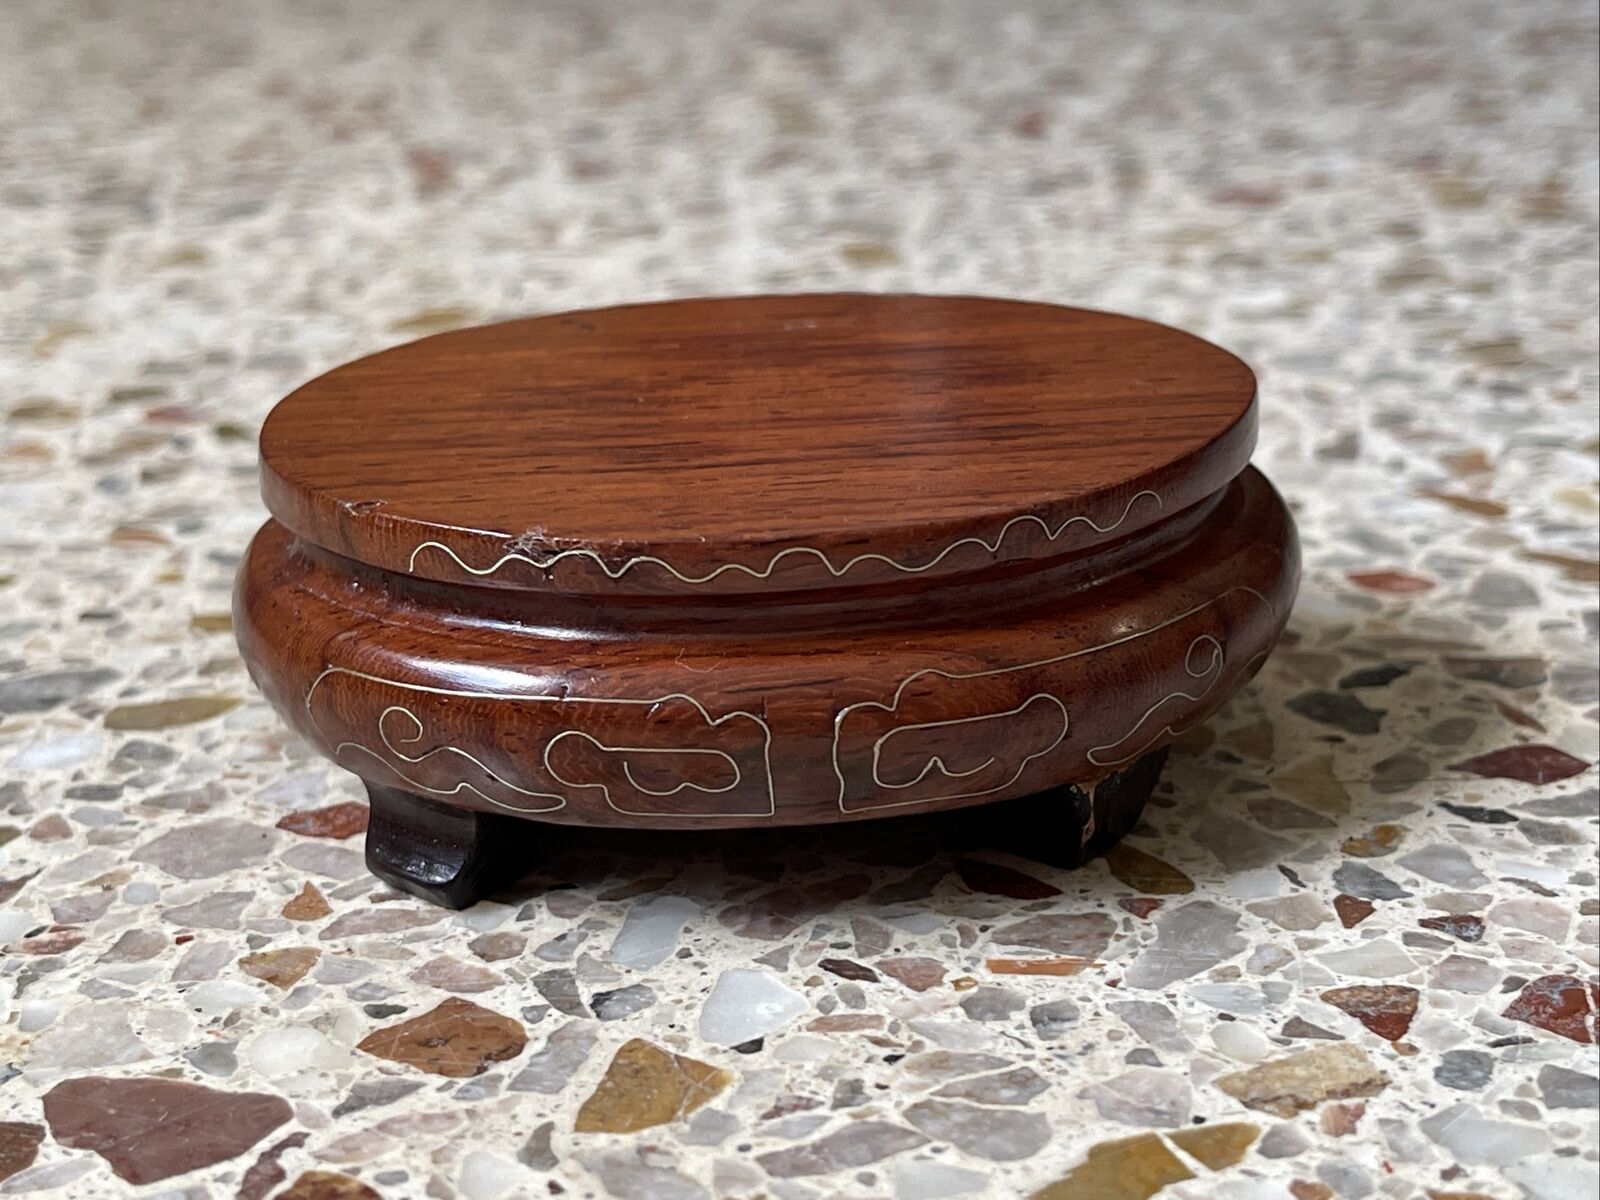 Beautiful Vintage Chinese wood stand - 3" diameter 